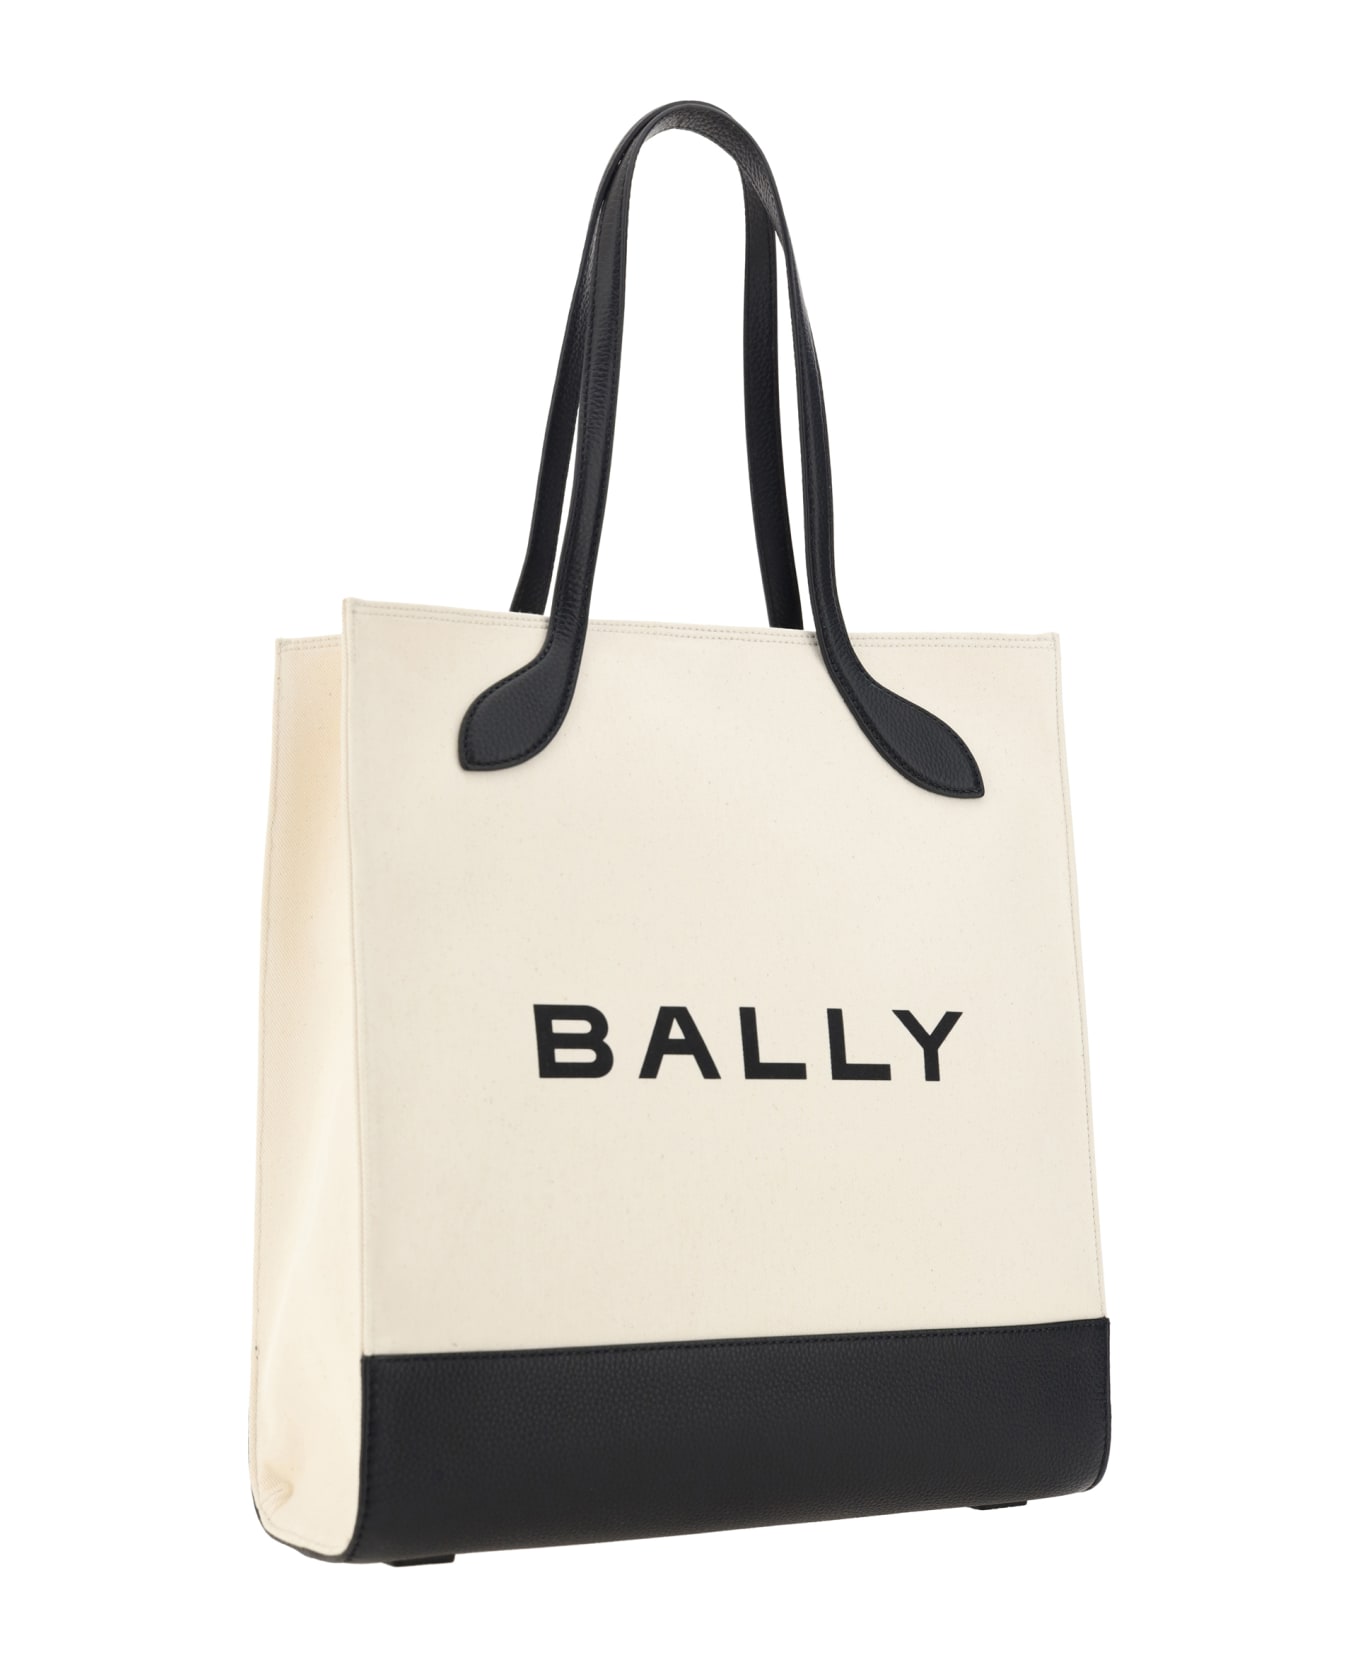 Bally Tote Handbag - White